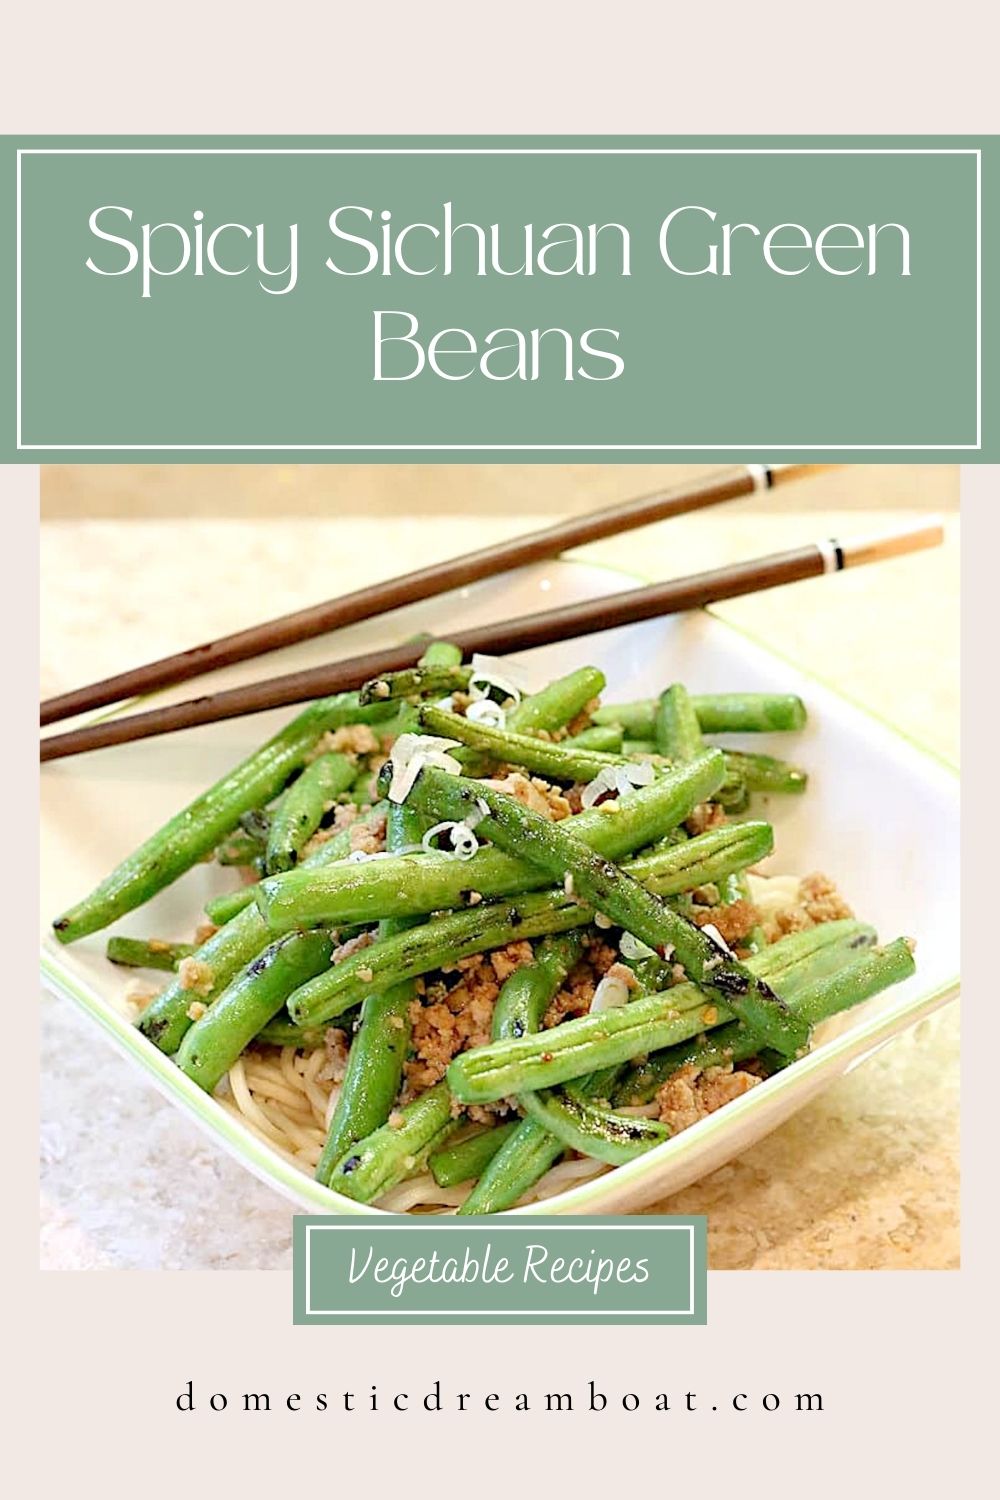 Spicy Sichuan Green Beans